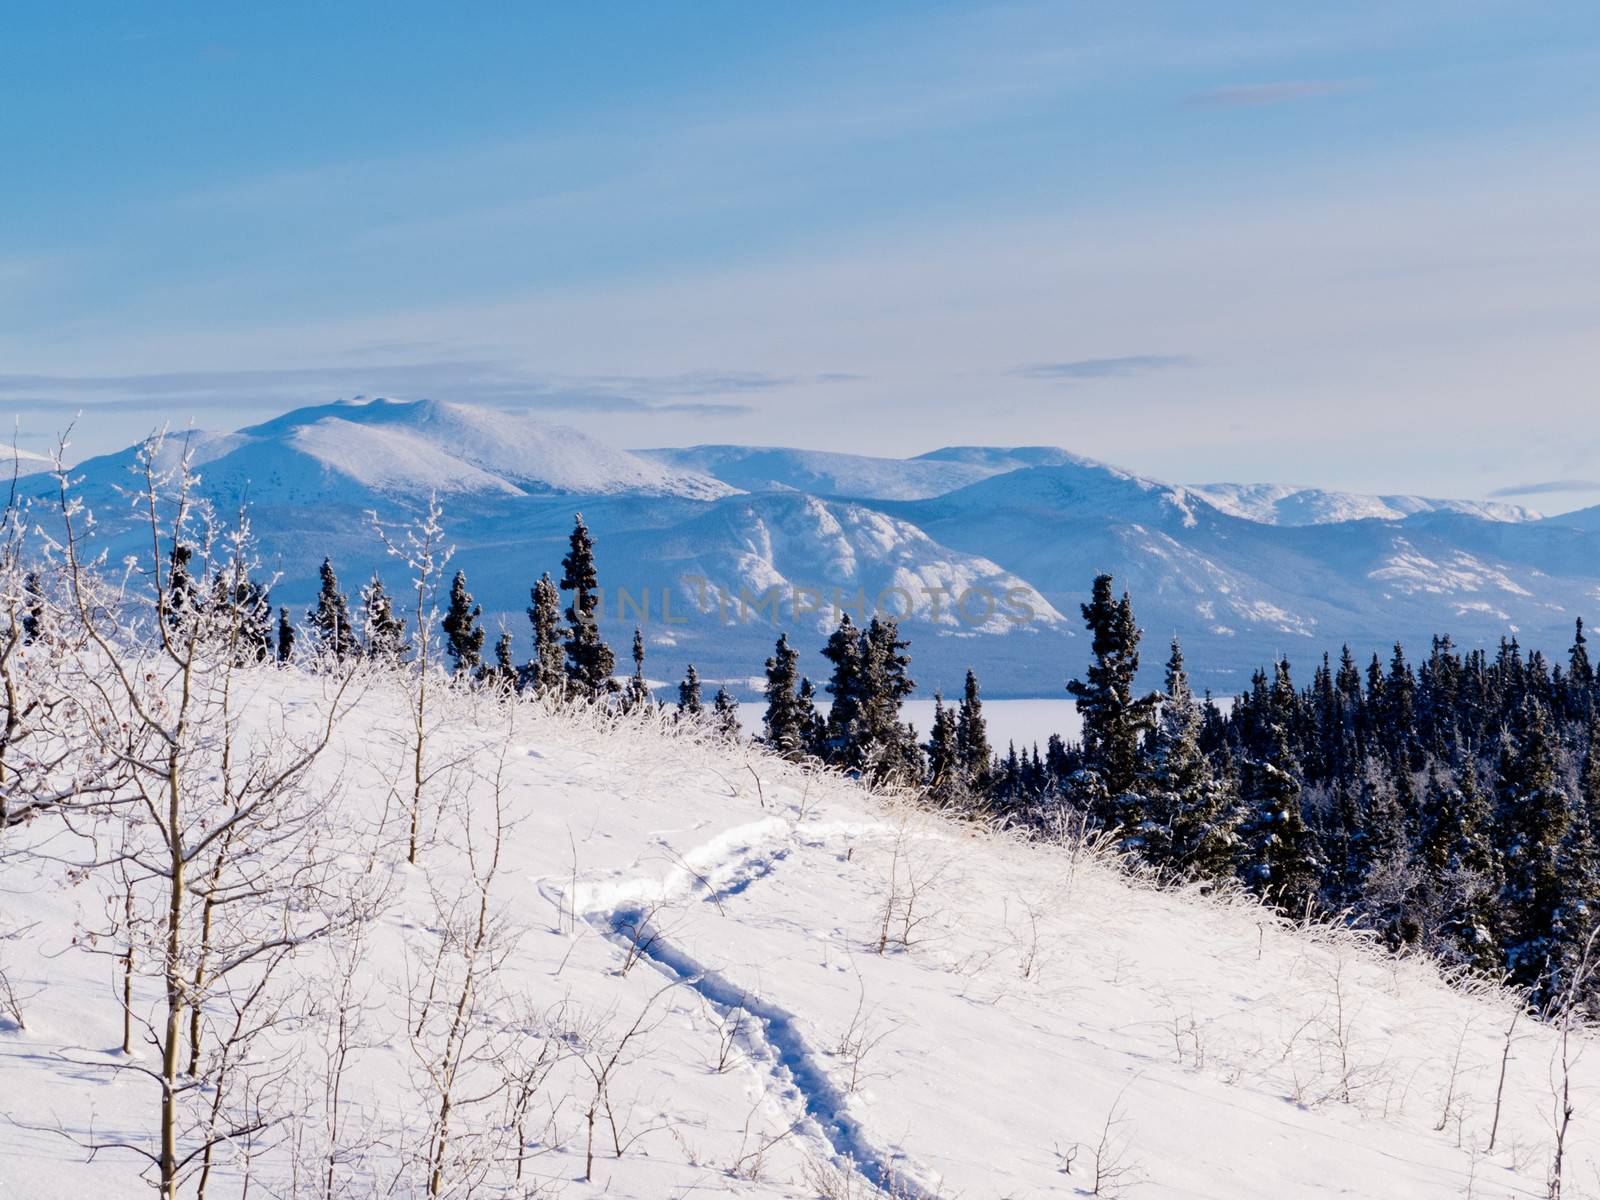 Taiga snowshoe path winter landscape Yukon Canada by PiLens